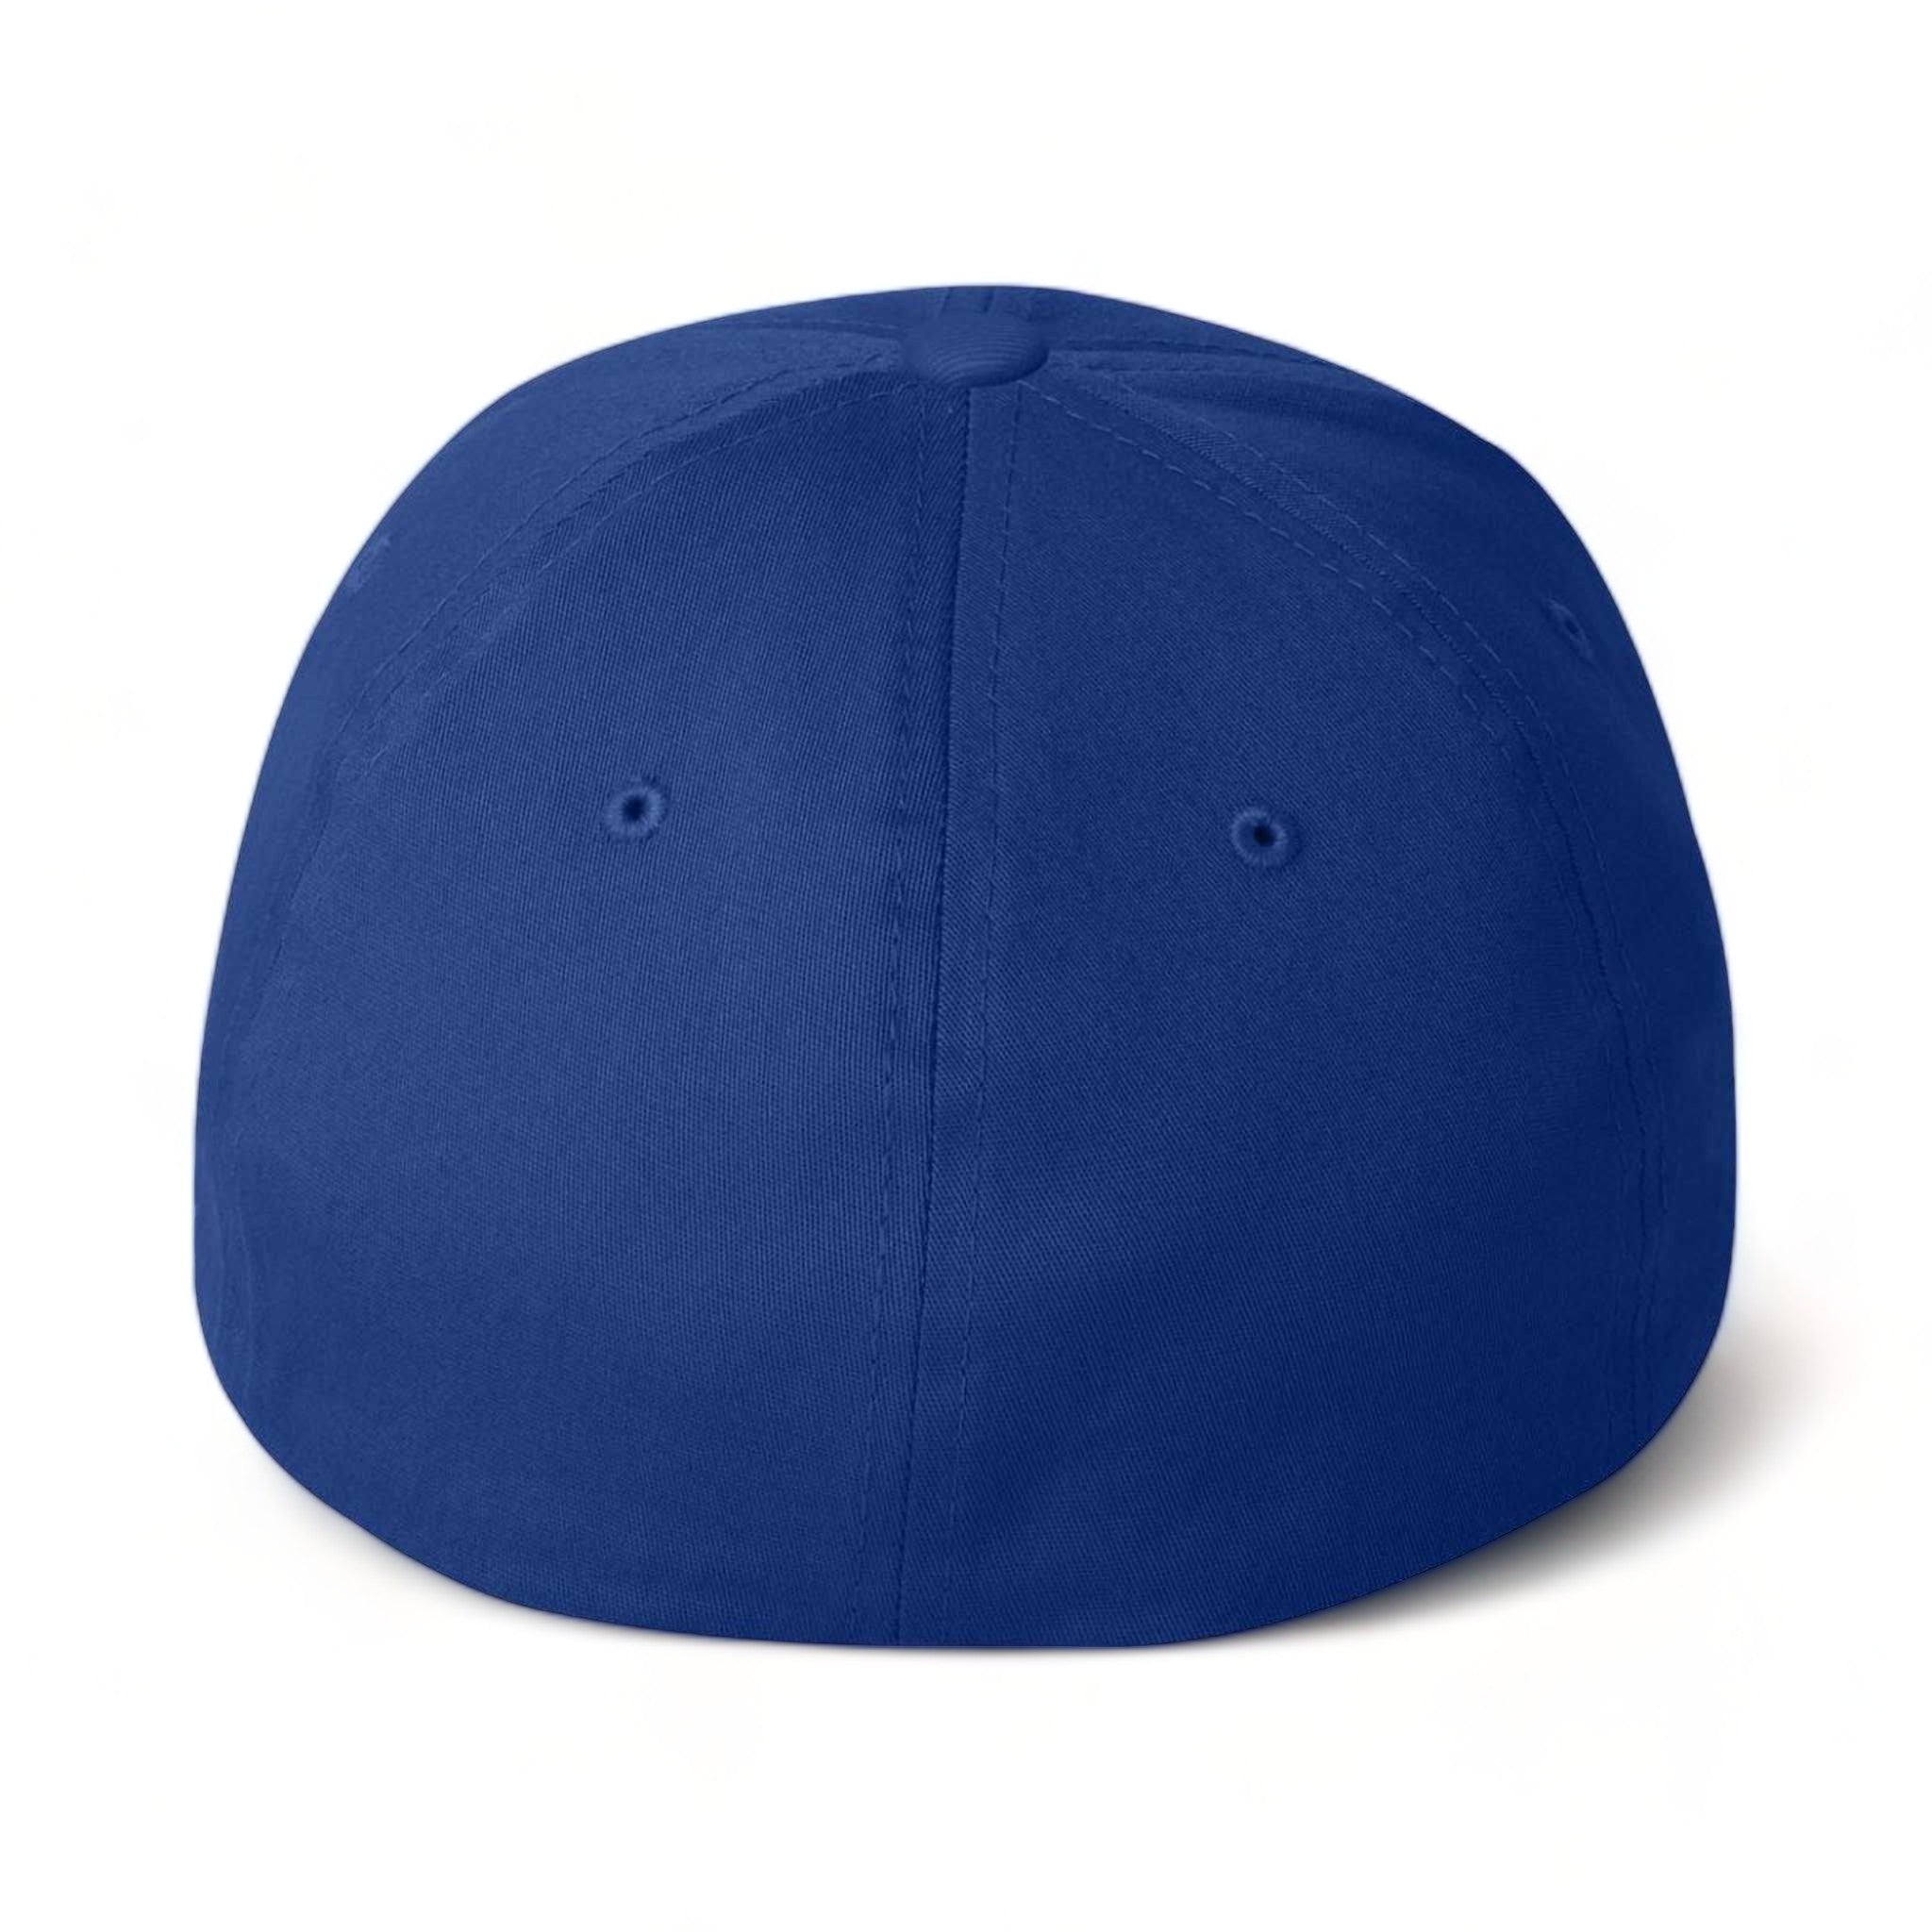 Back view of Flexfit 5001 custom hat in royal blue